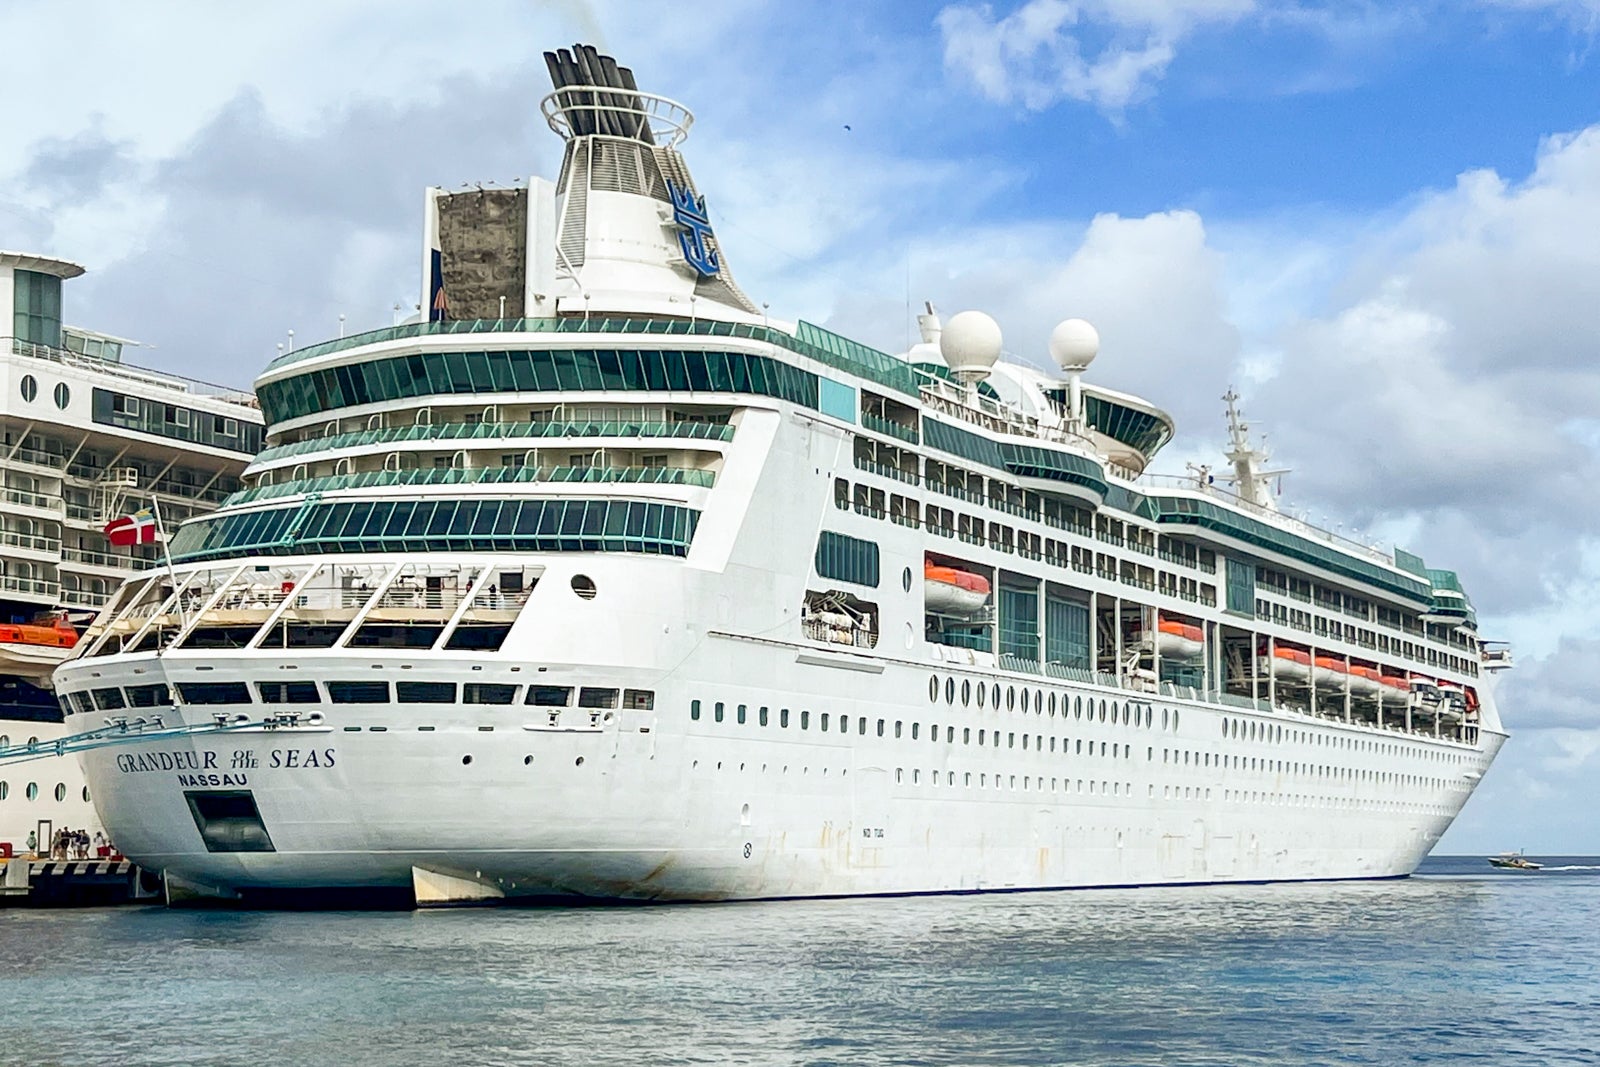 Grandeur of the Seas cruise ship in port